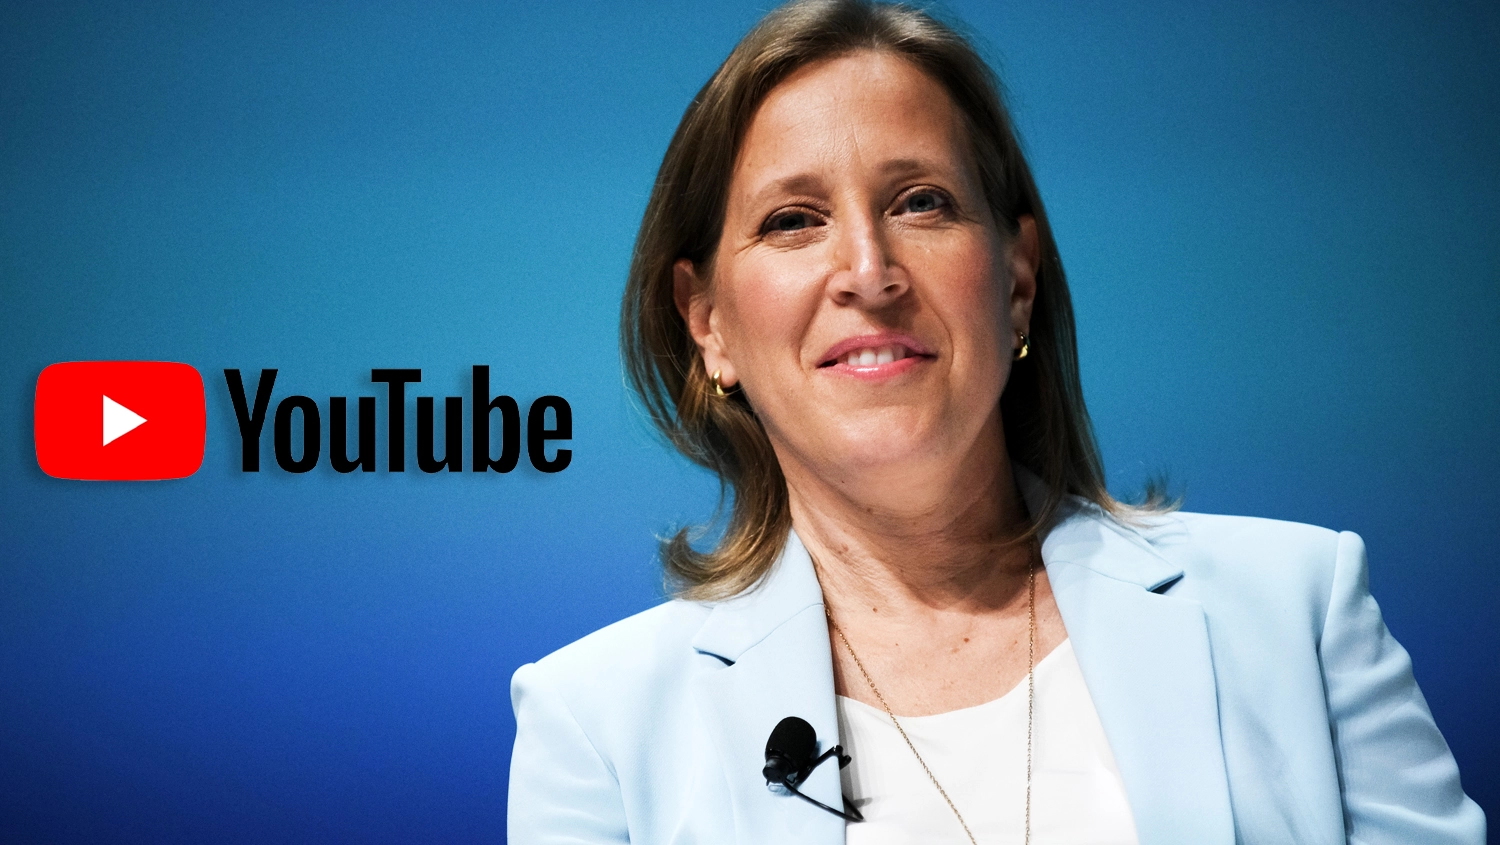 Susan-YouTube-CEO